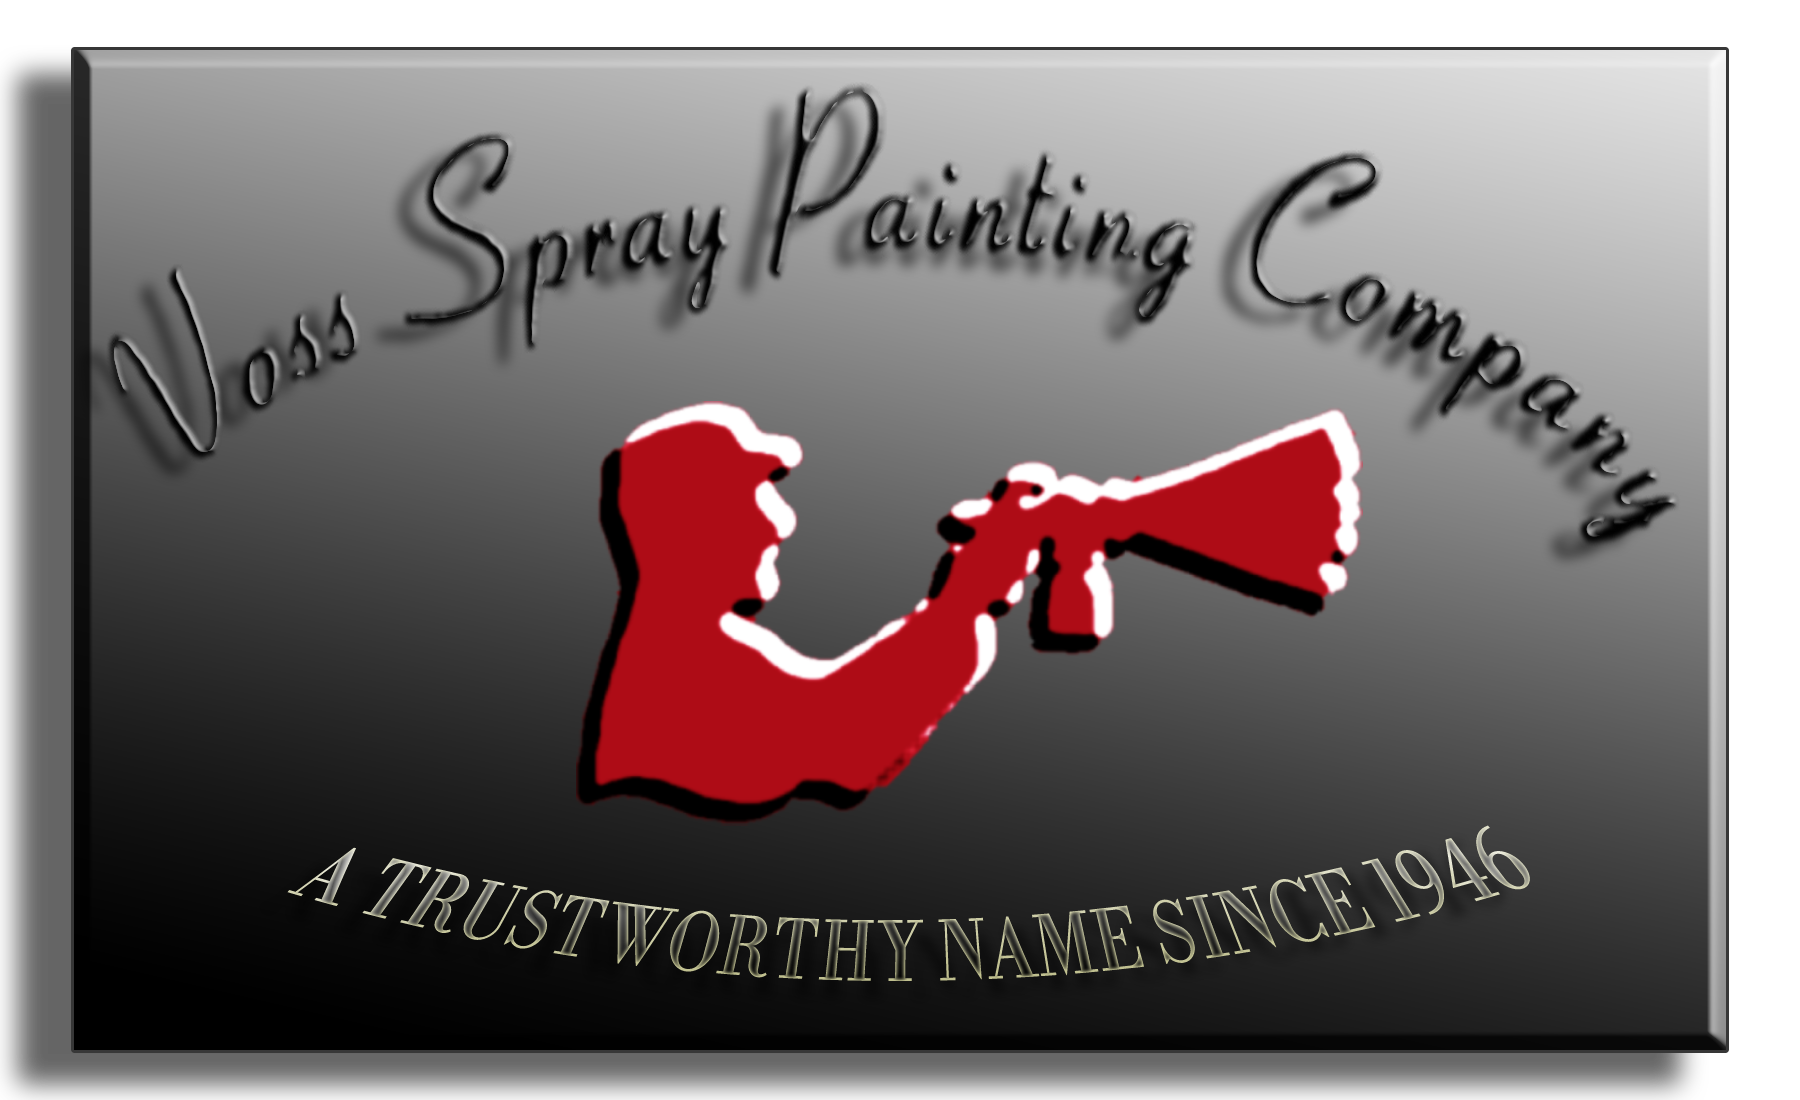 Voss Spray Painting Company